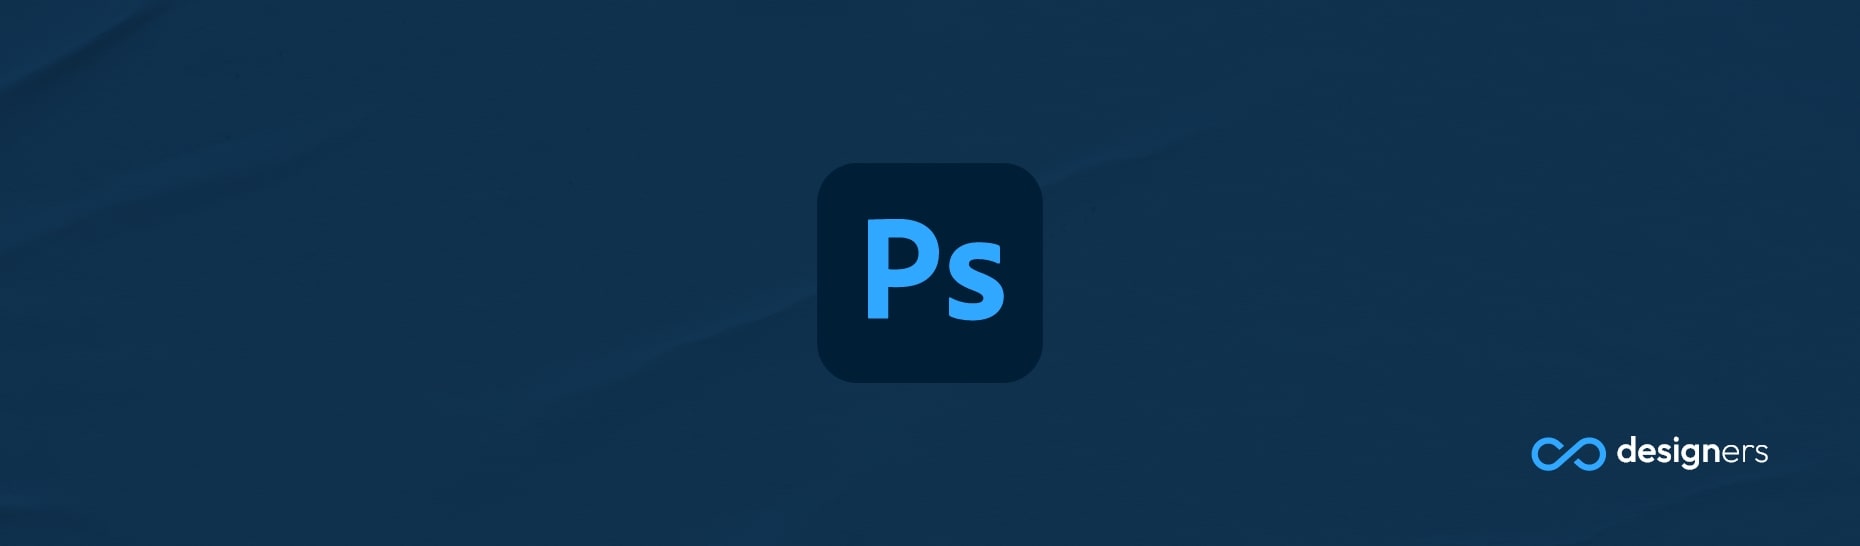 Is Photoshop Free on Mac?